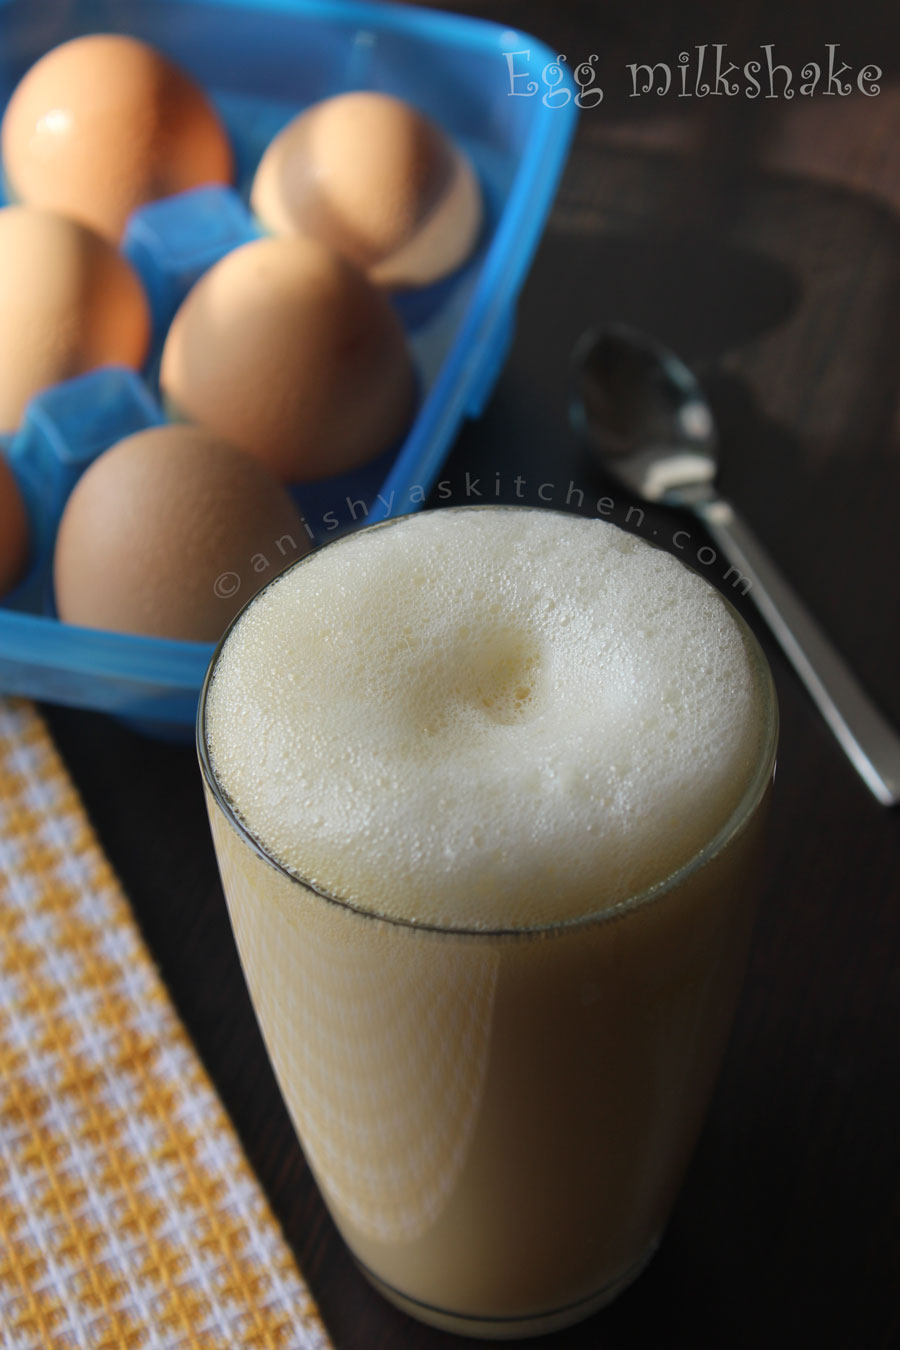 Mottem-paalum-adichathu-egg-milkshake-protien-milksahke-kids-recipes-healthy-drinks-protien-shakes-kerala-recipes